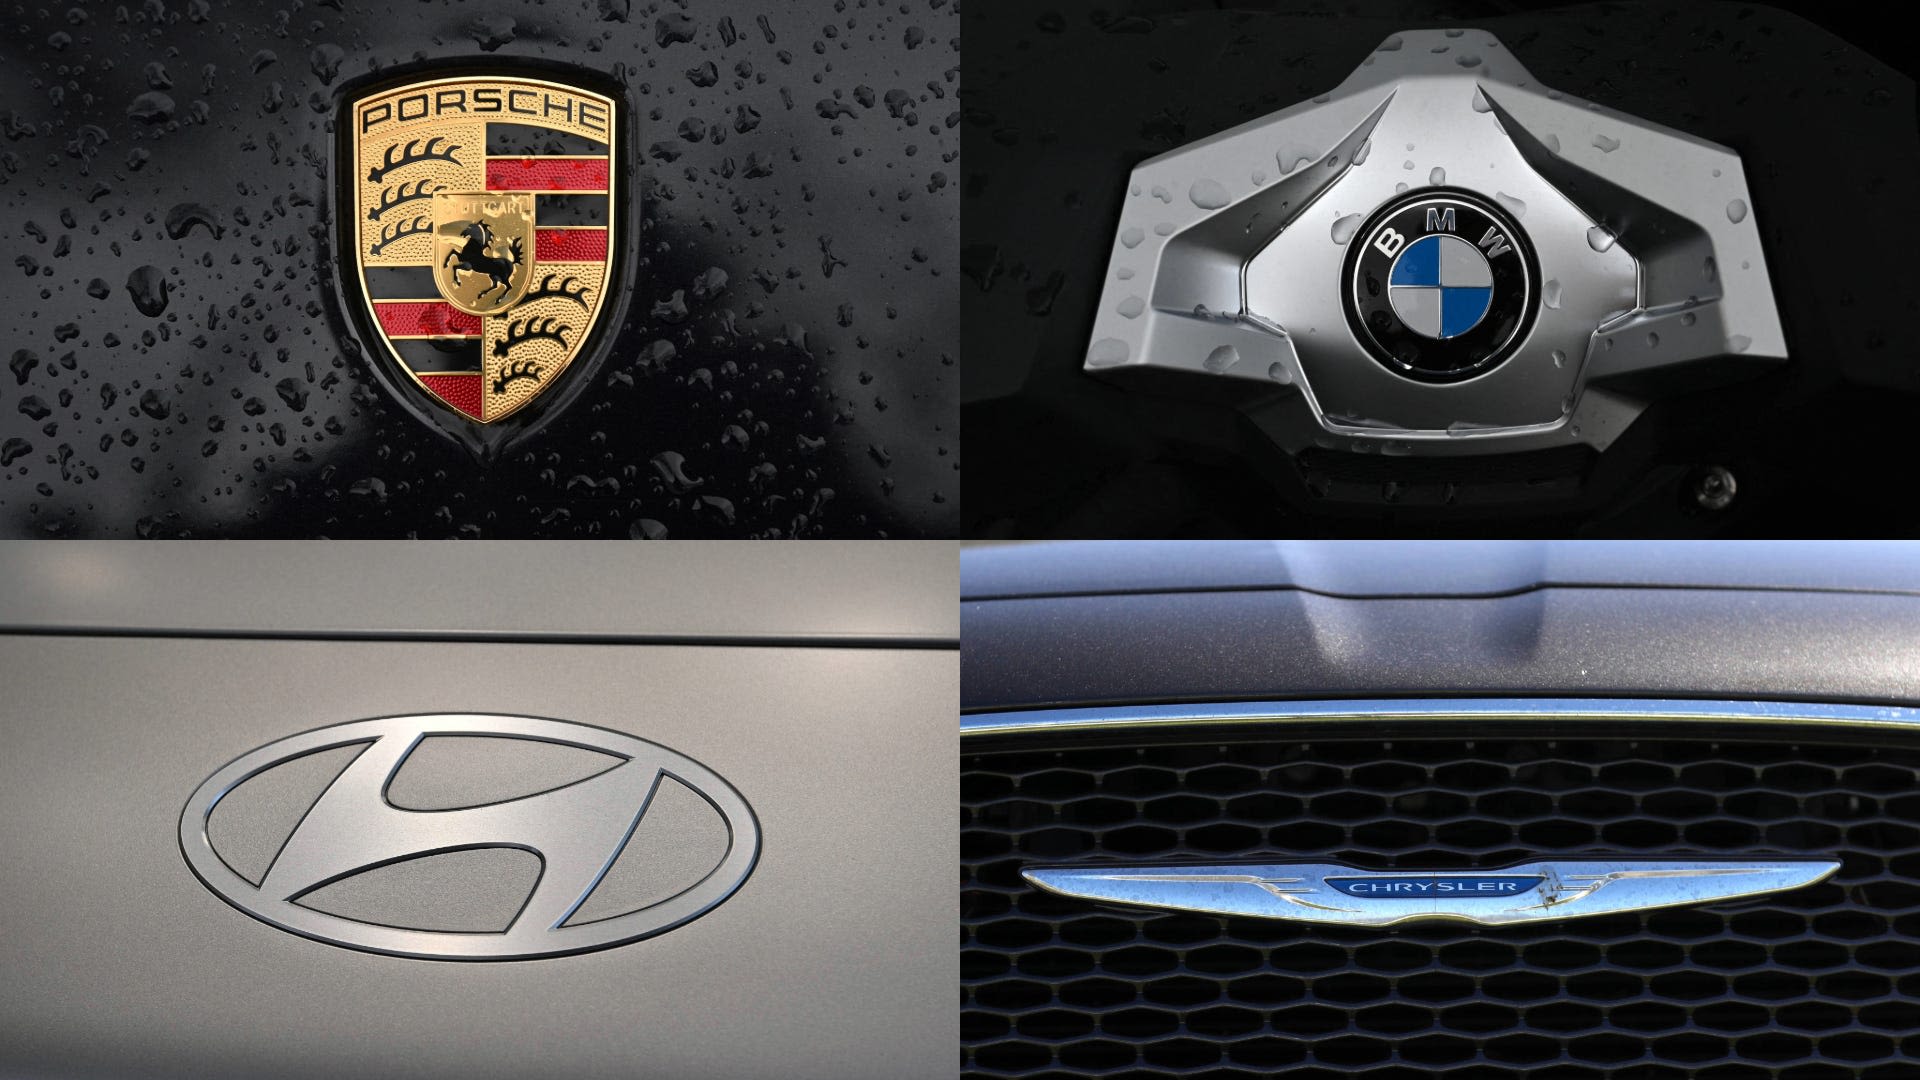 Hyundai, Chrysler, Porsche, BMW among 94K vehicles recalled: Check car recalls here